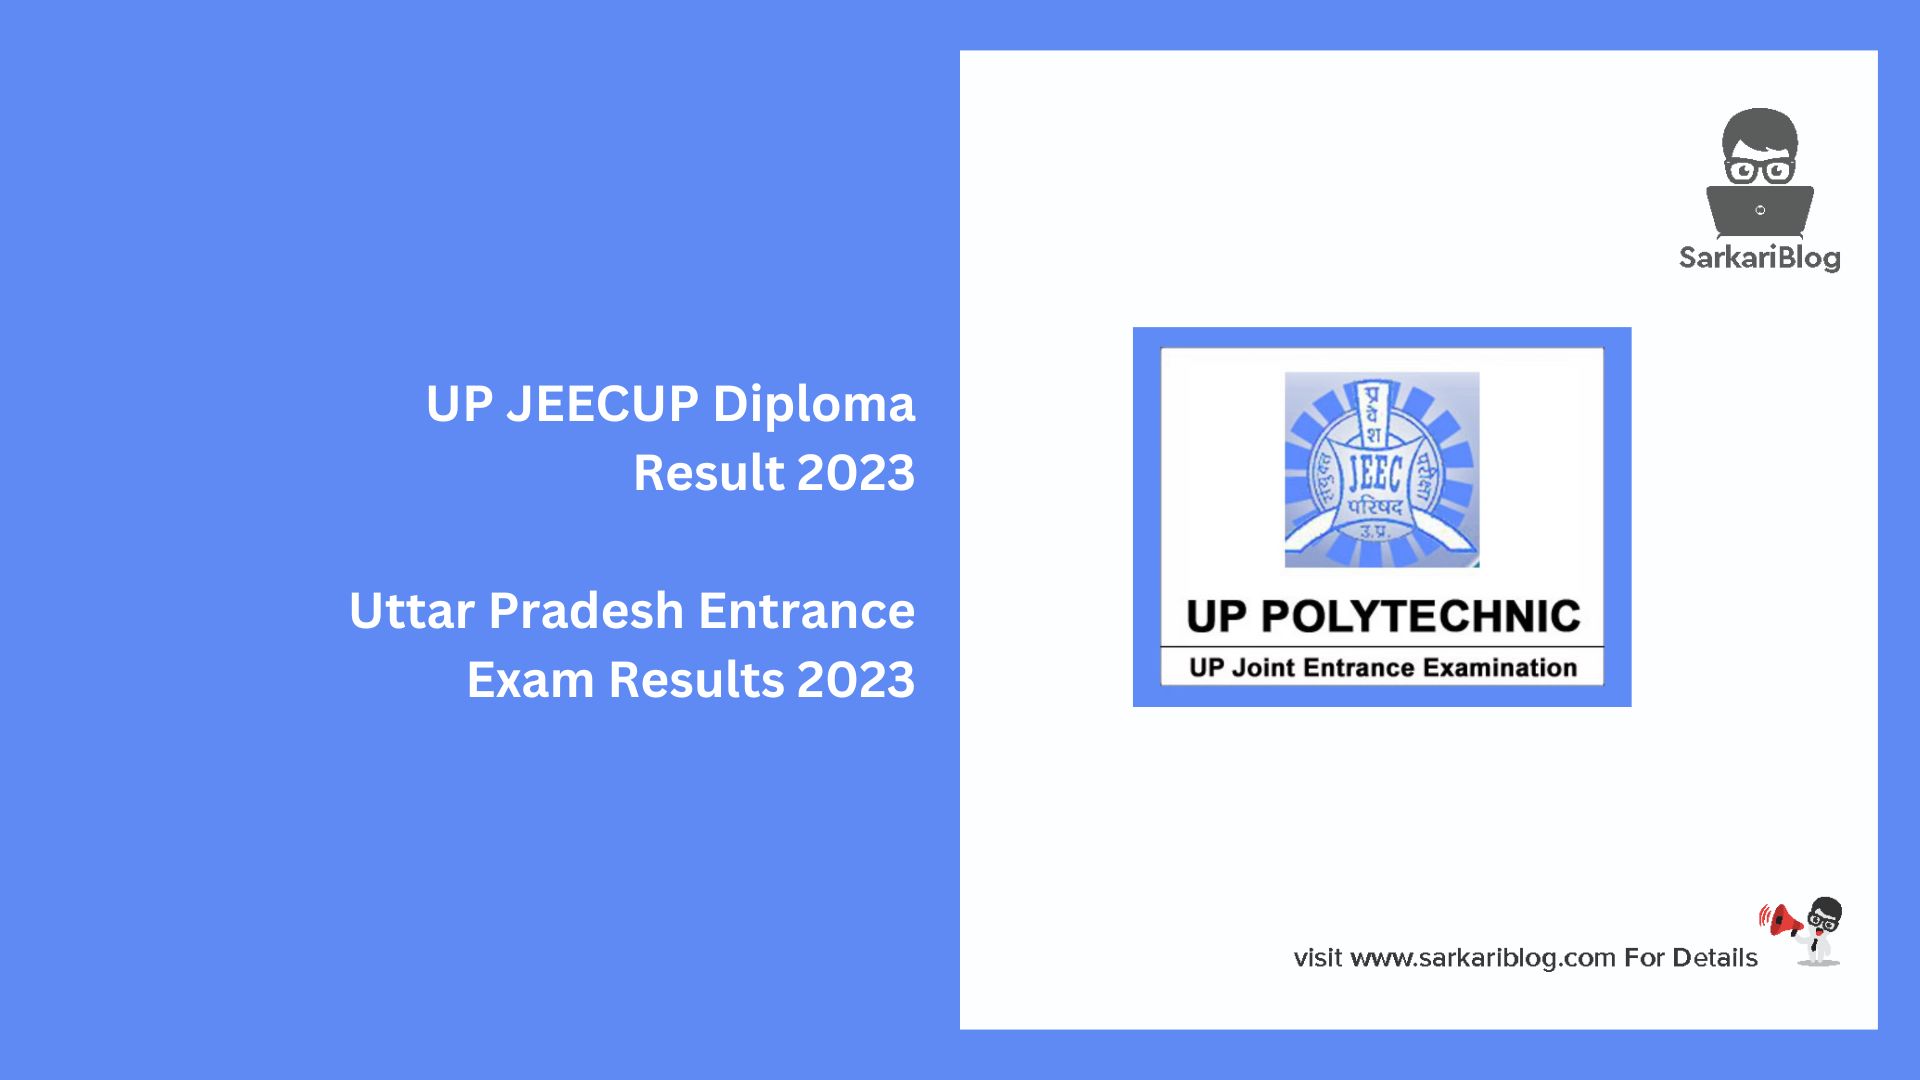 UP JEECUP Diploma Result 2023